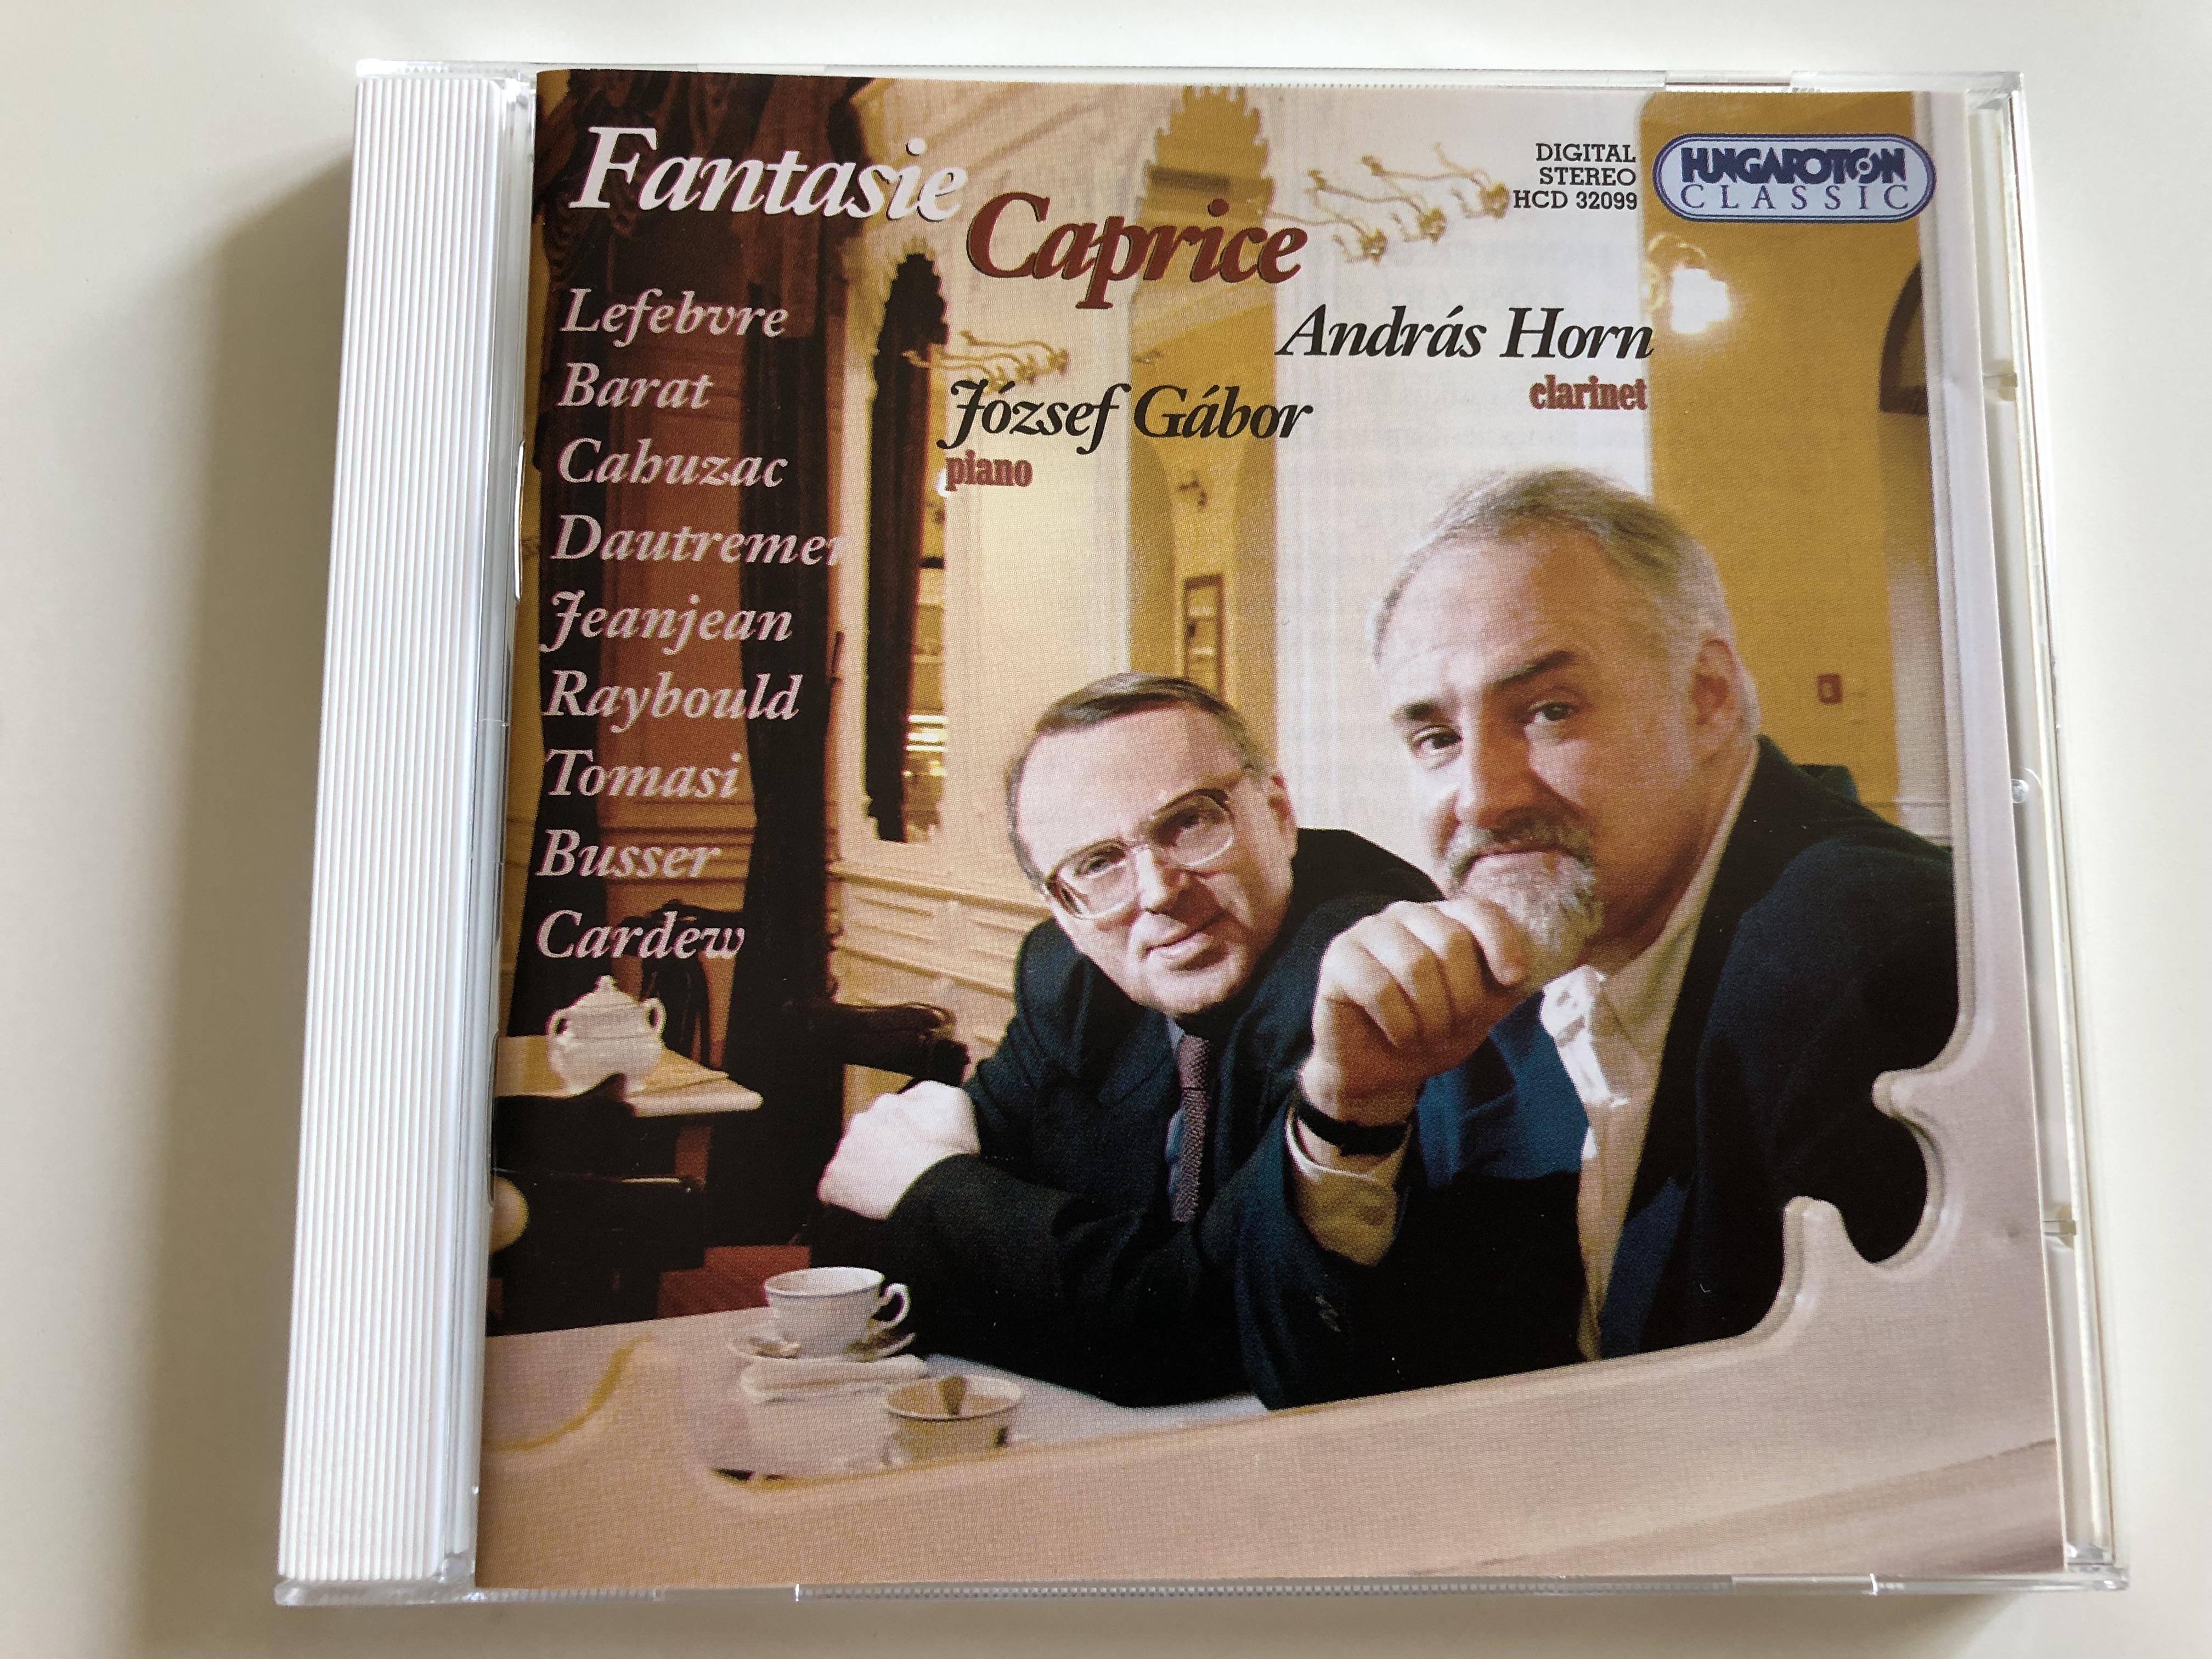 fantasie-caprice-andr-s-horn-clarinet-j-zsef-g-bor-piano-lefebvre-barat-cahuzac-dautremer-tomasi-busser-cardew-hungaroton-classic-audio-cd-2003-hcd-32099-1-.jpg